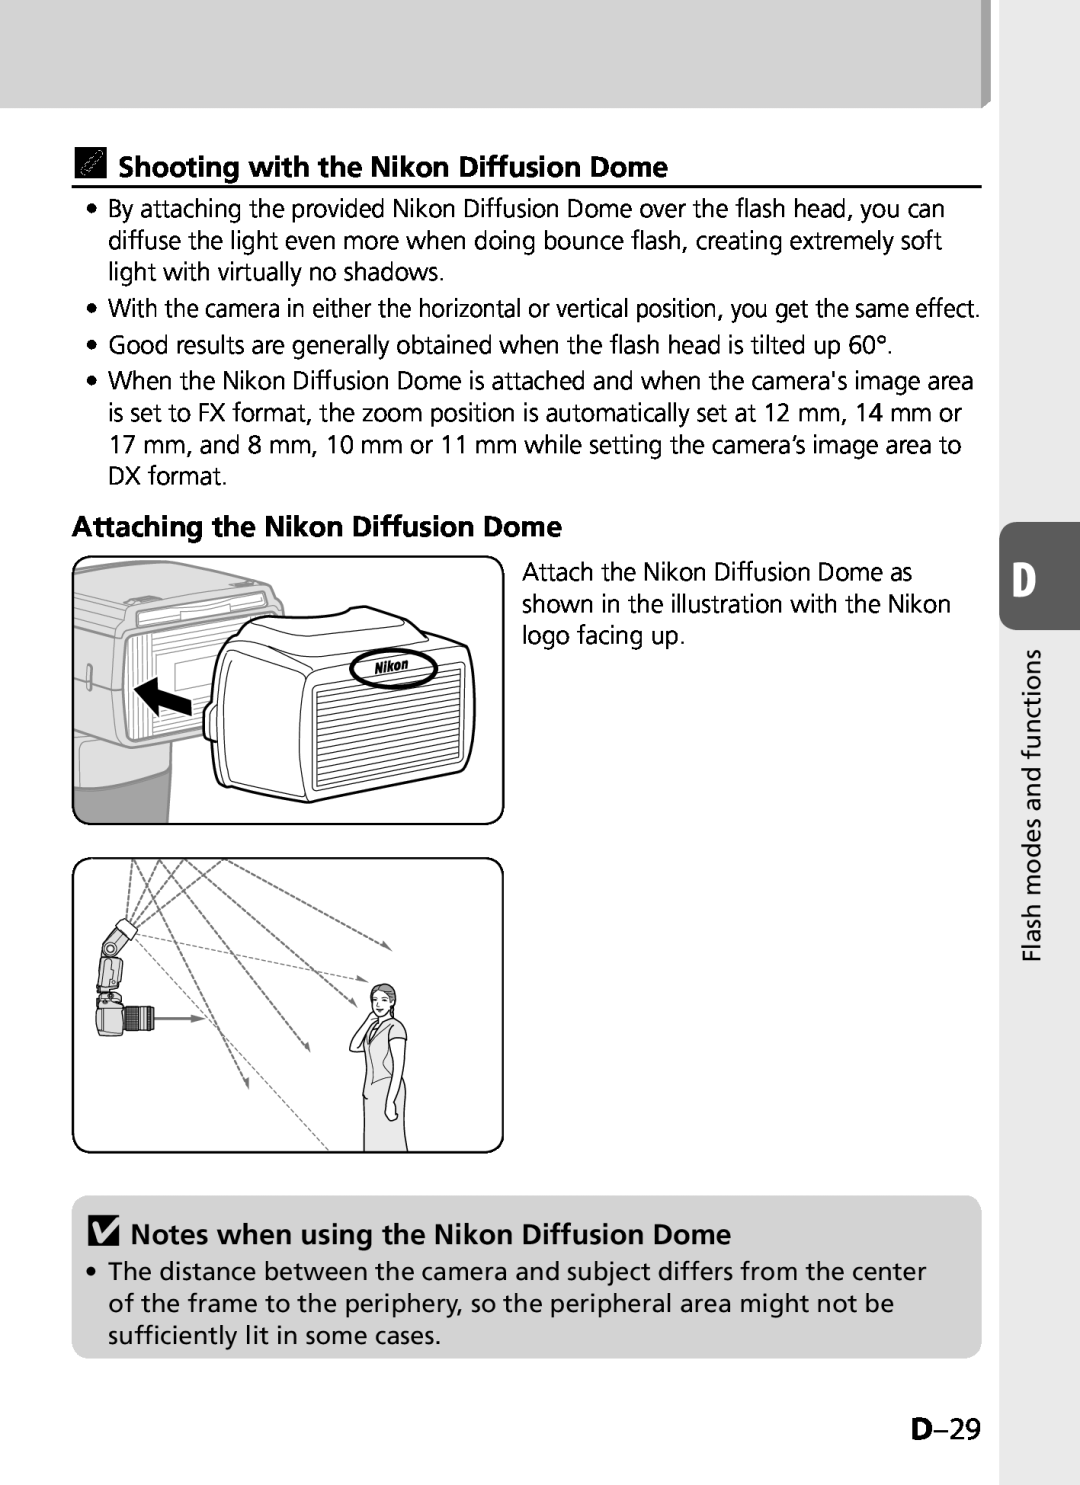 Univex SB-900 user manual D–29, tShooting with the Nikon Diffusion Dome, Attaching the Nikon Diffusion Dome 